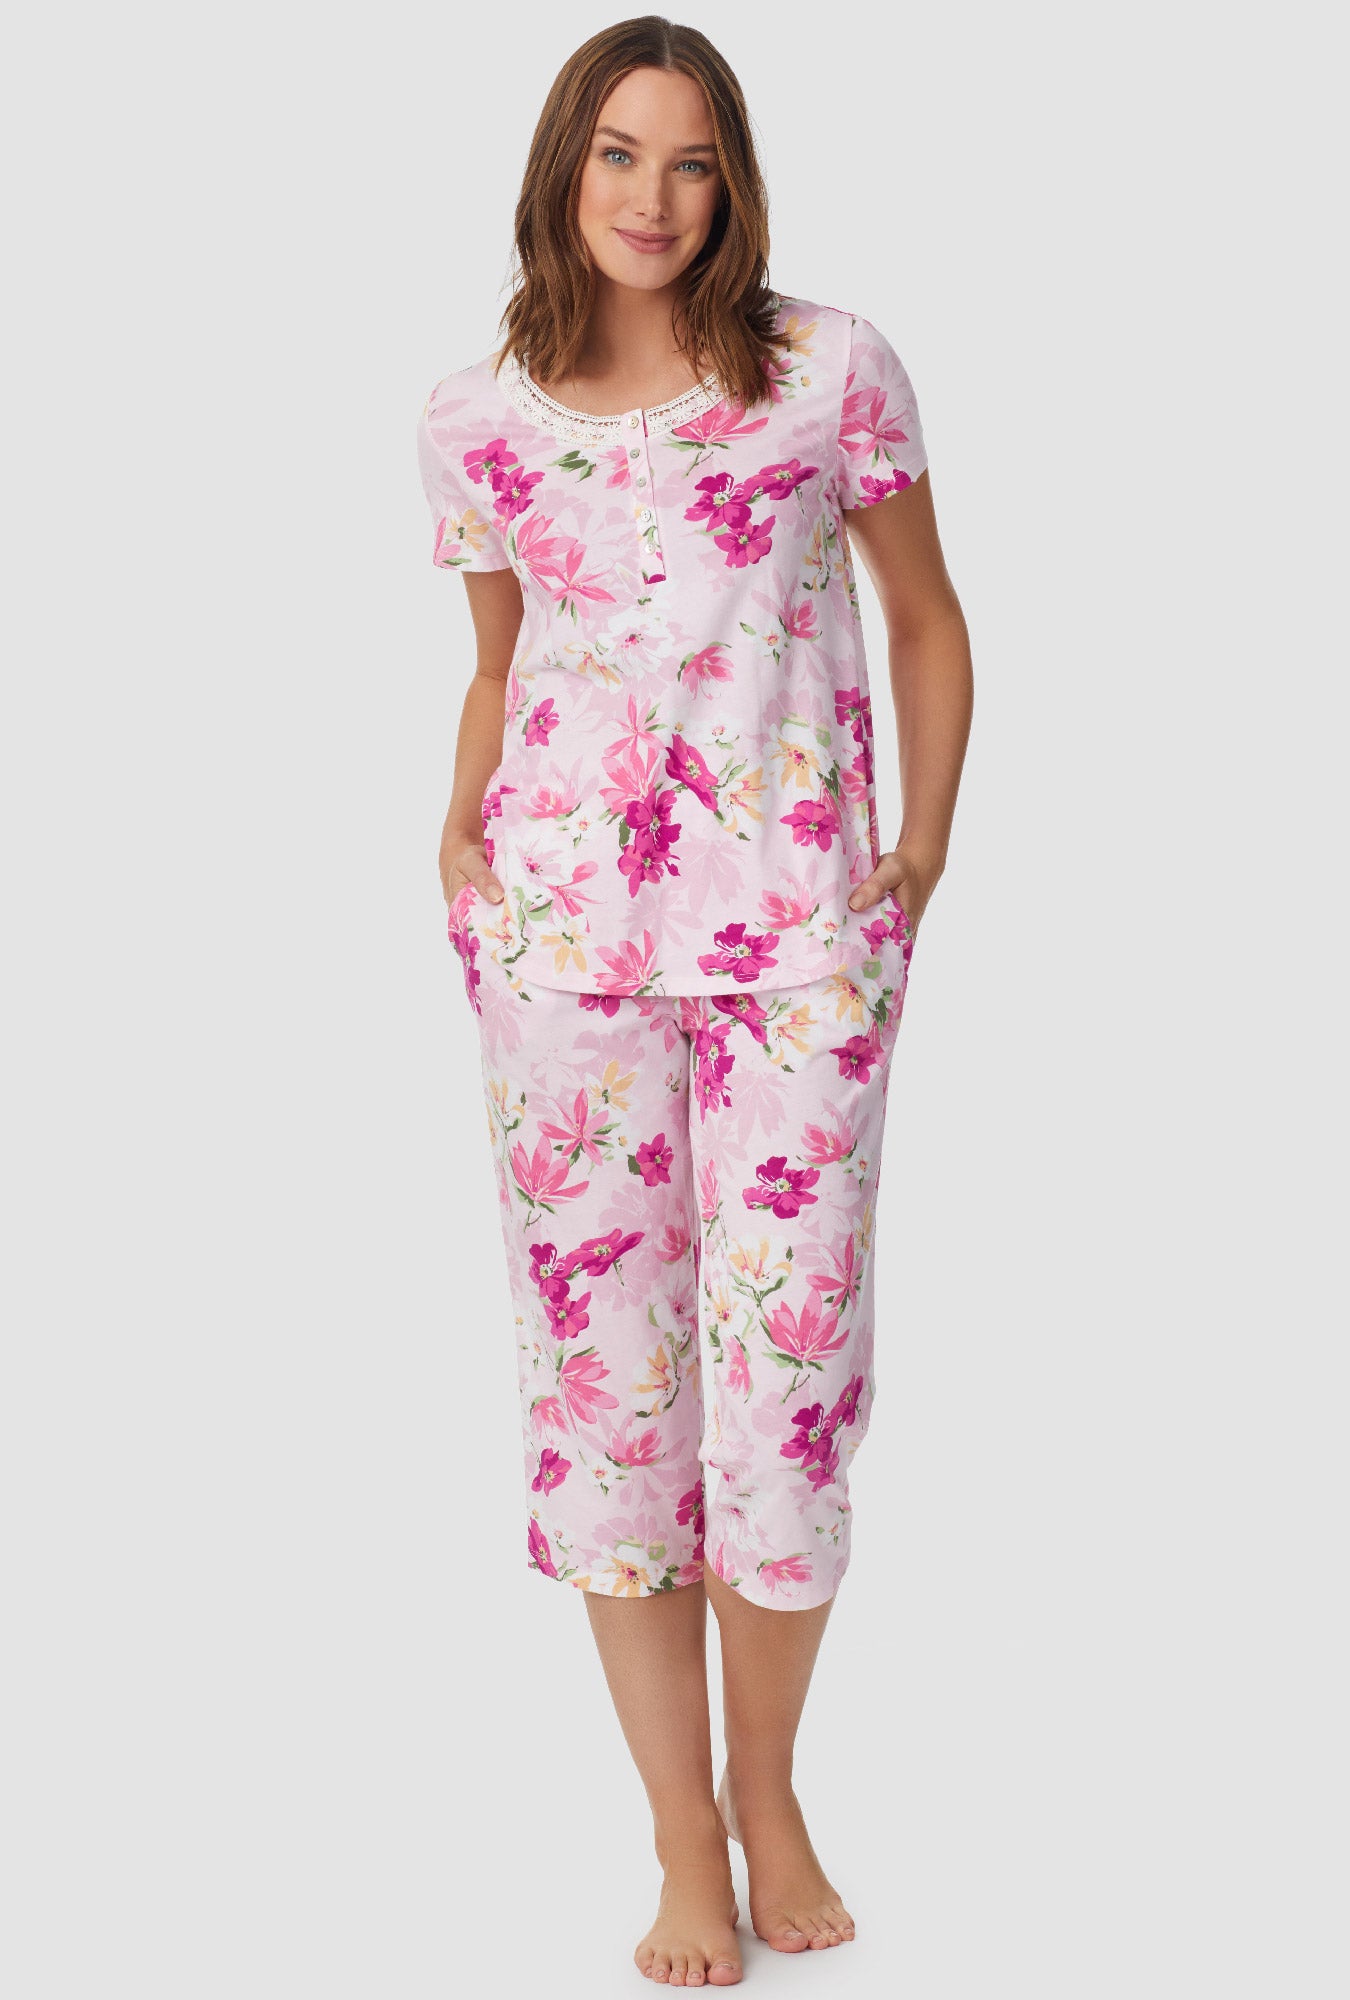 Casual Nights Women's Short Sleeve Top with Capri Pants Pjs Floral Border  Capri Pajama Set